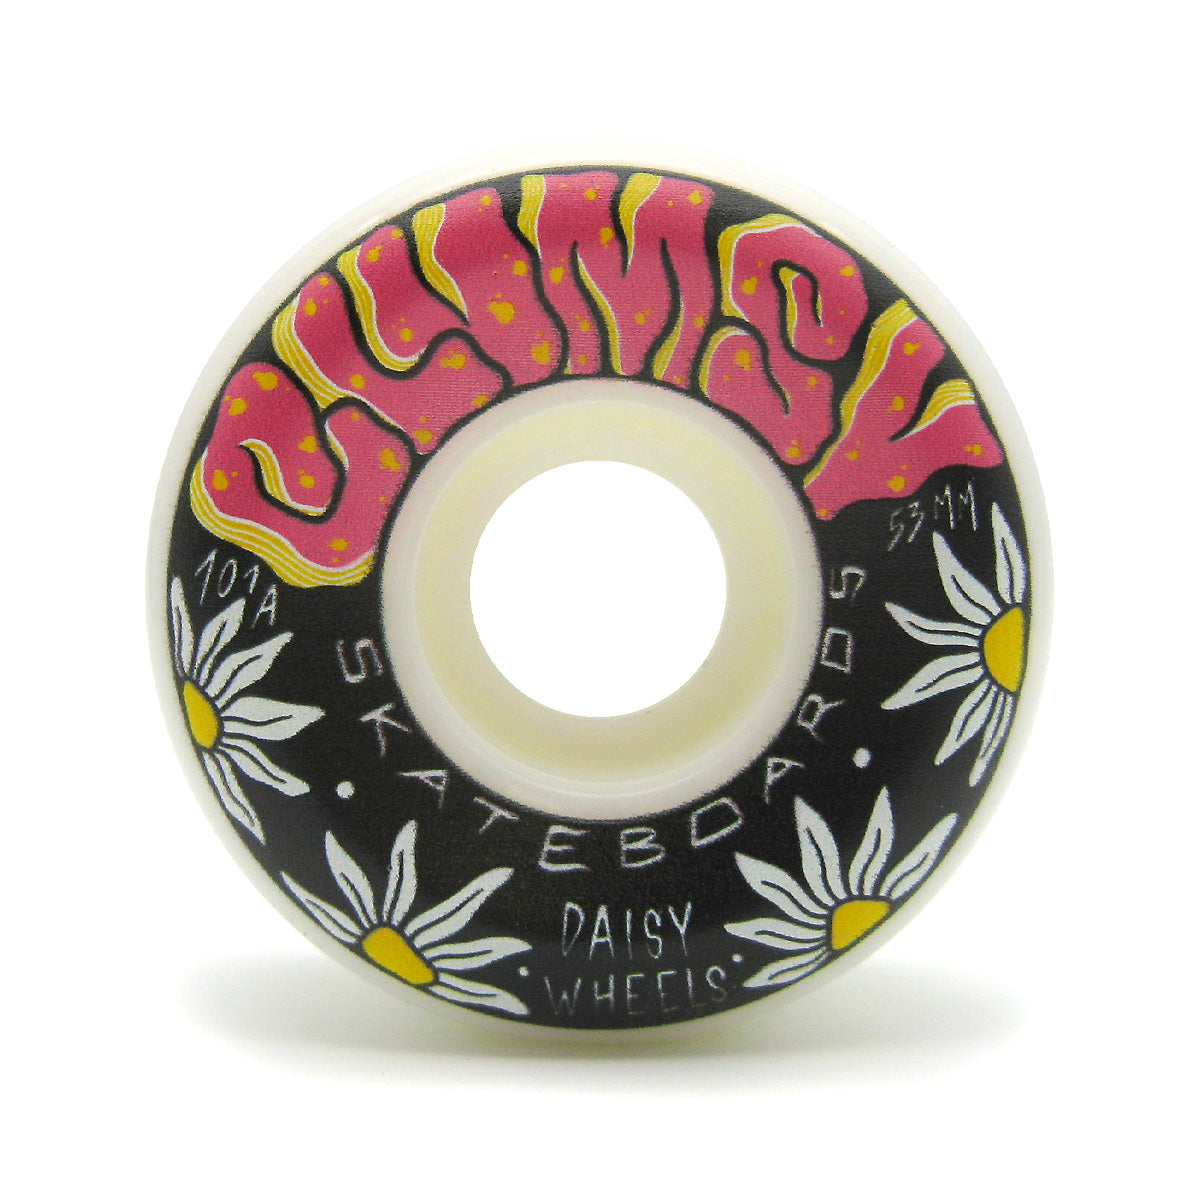 Clumsy skateboards Daisy 53mm 101a